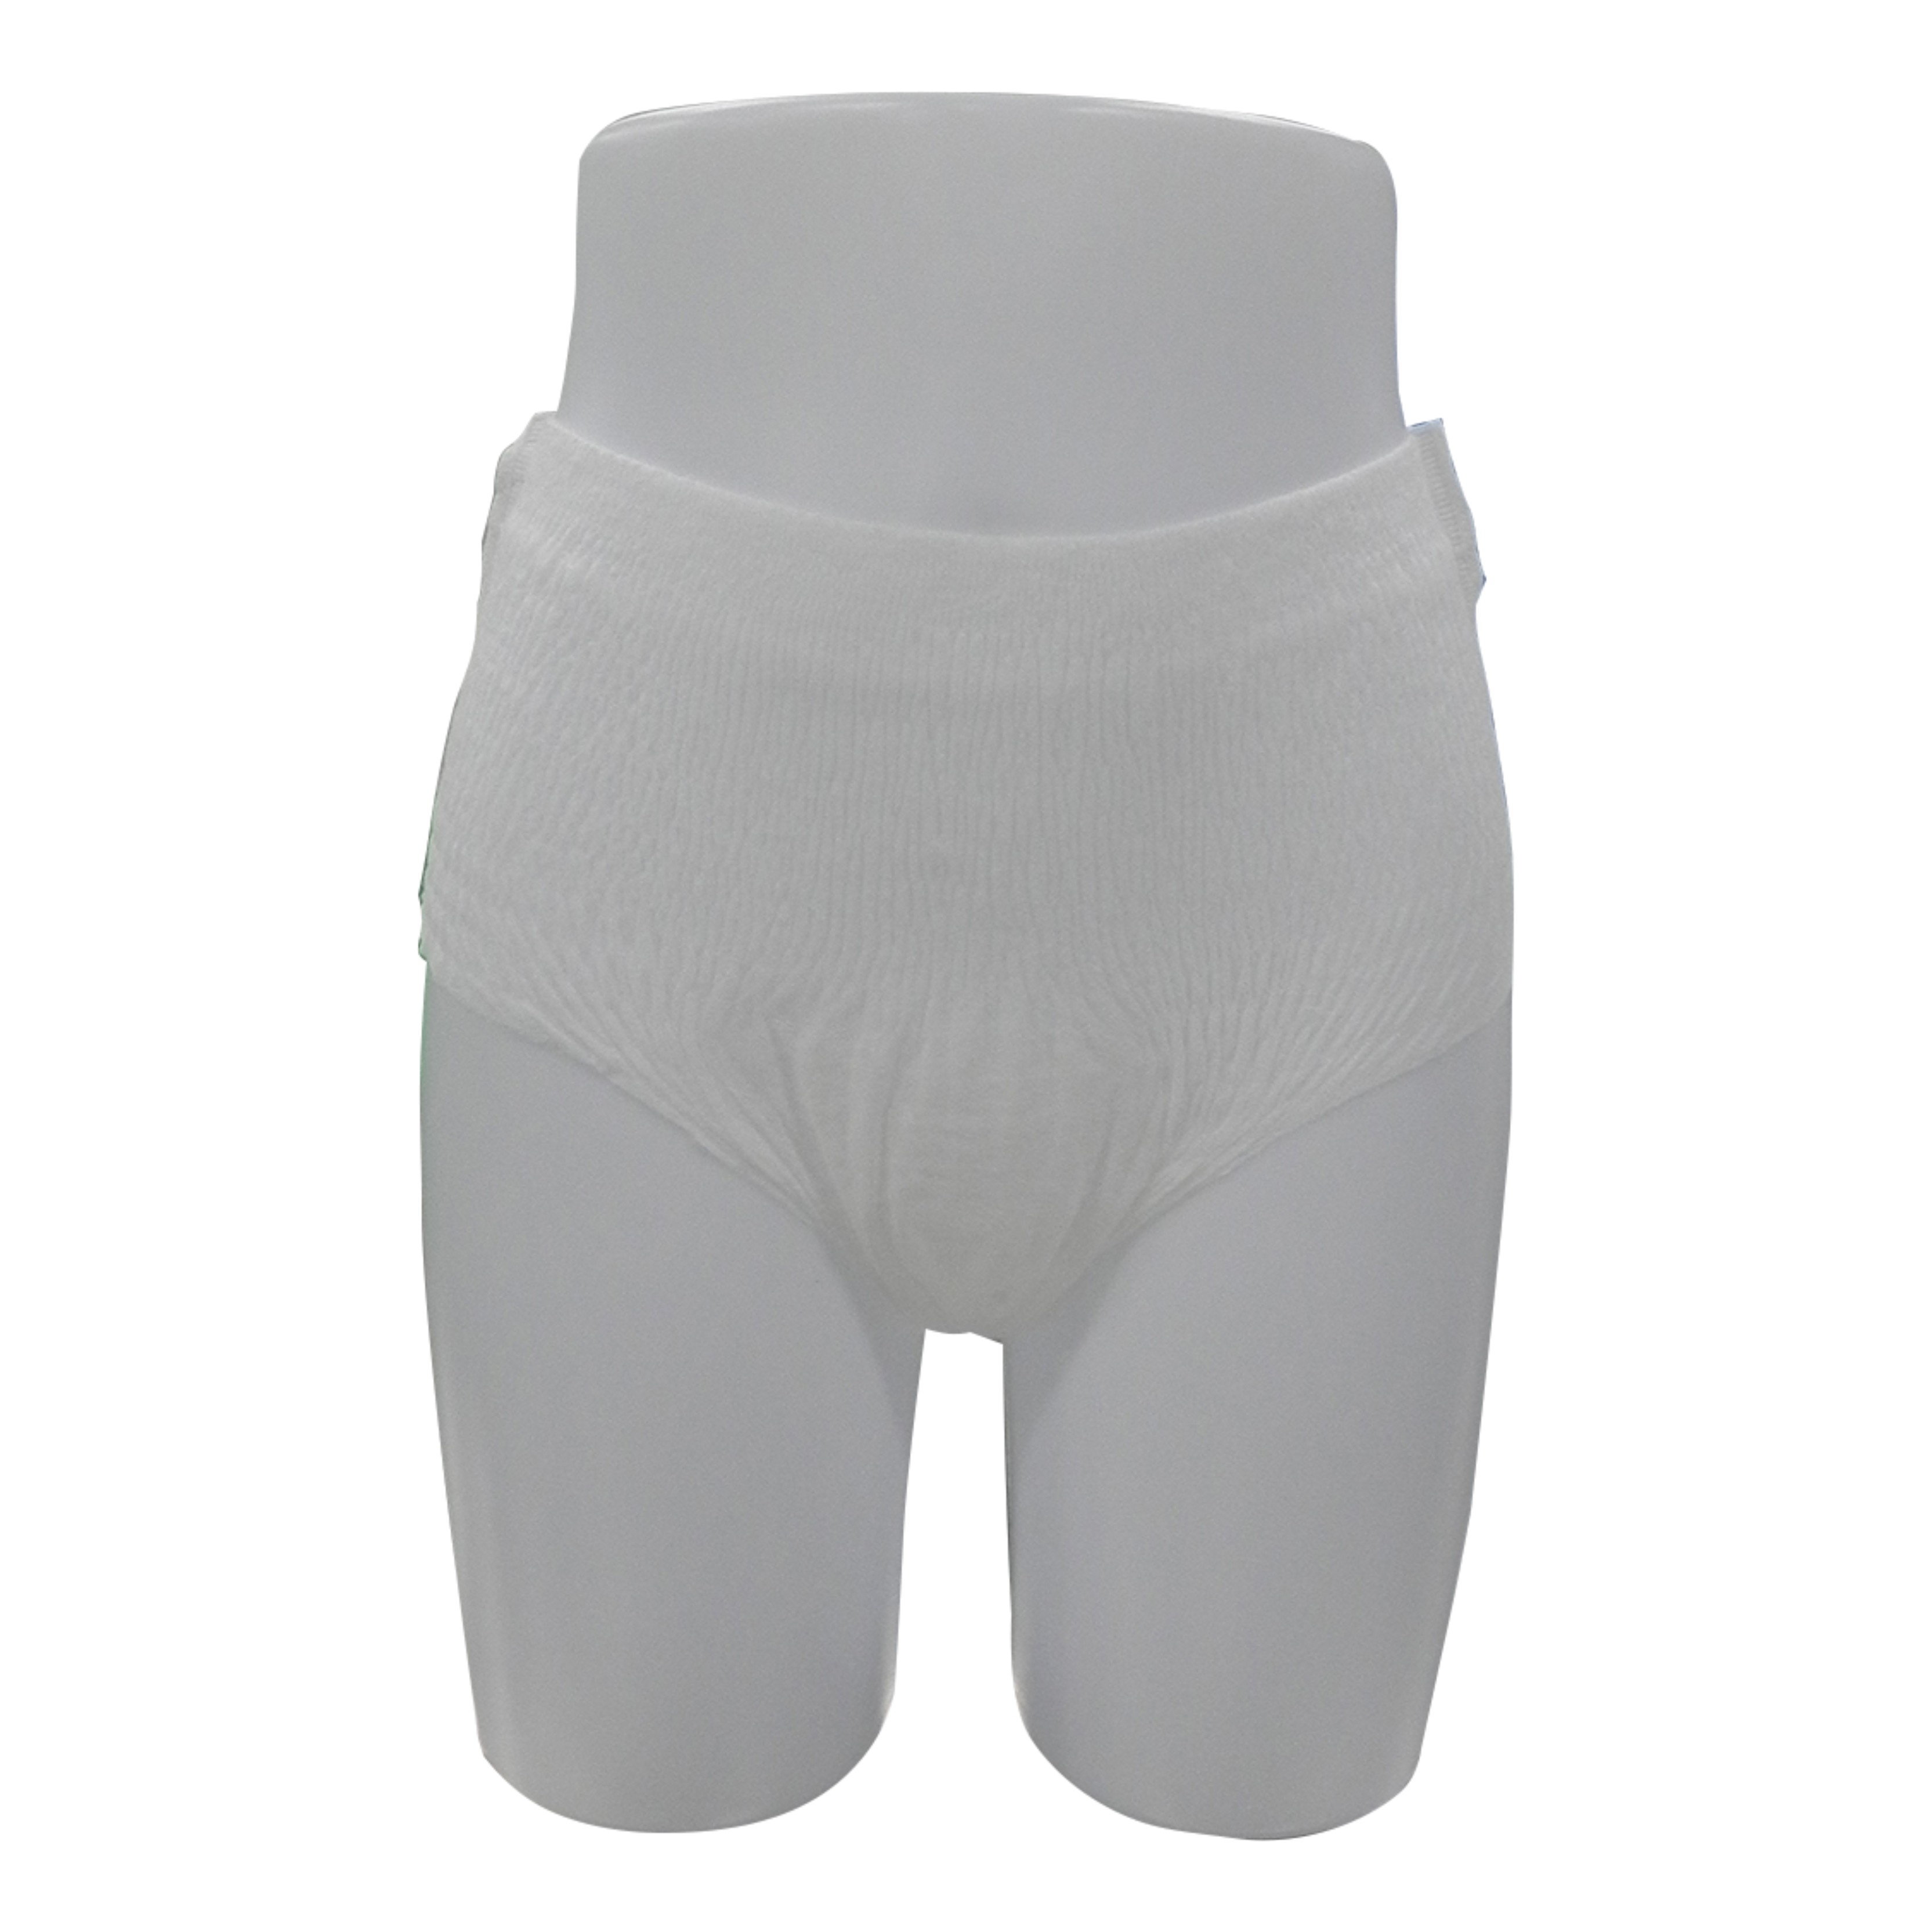 8 Year Exporter Hygiene Pads - super sleepy lady women sanitary napkins female period pants in pull up style – Yoho